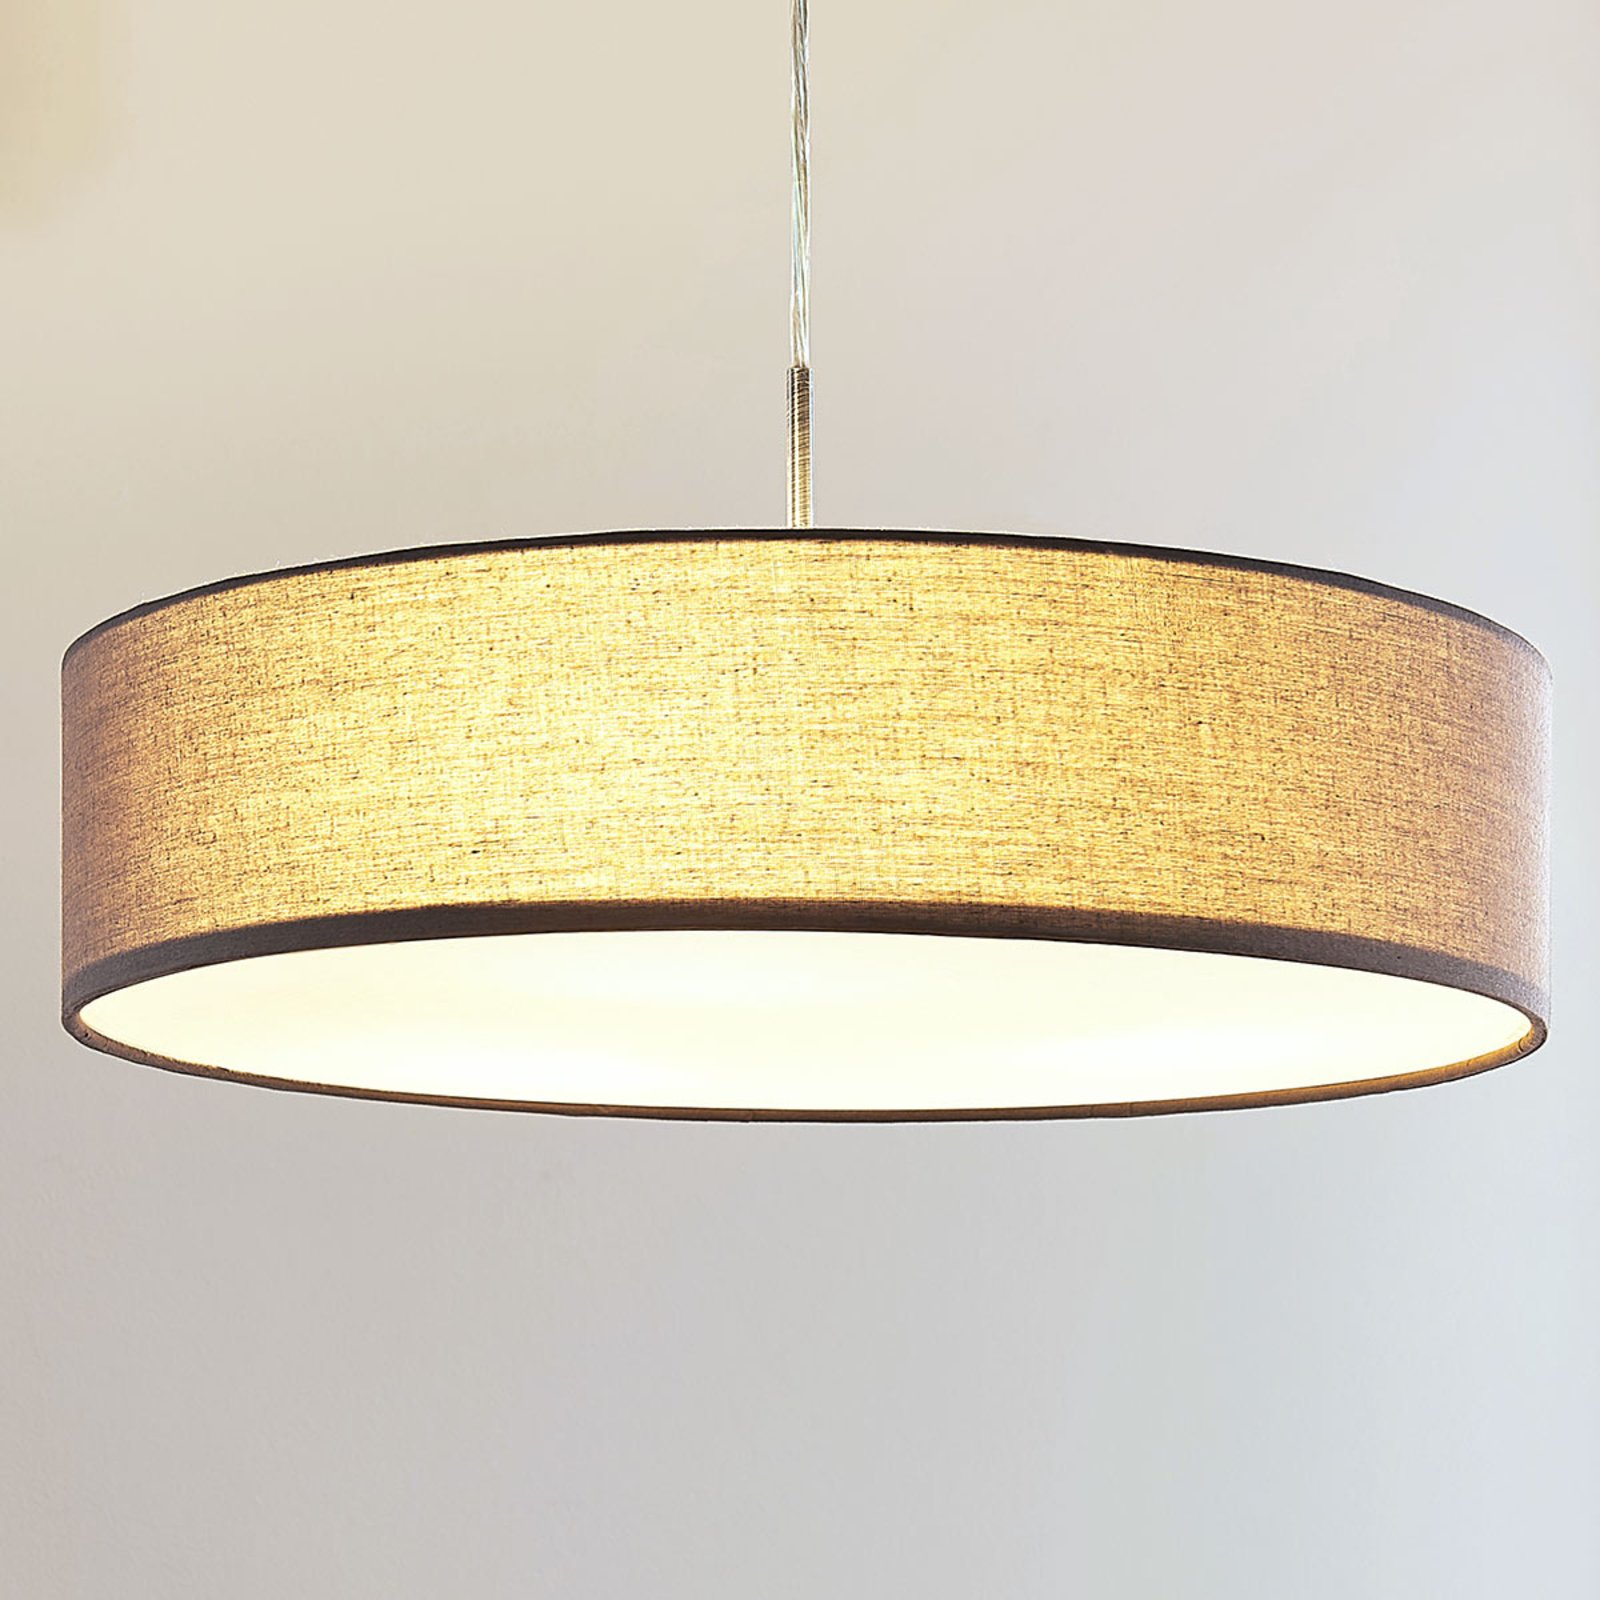 Sebatin pendant light for E27 LED, 50 cm, grey